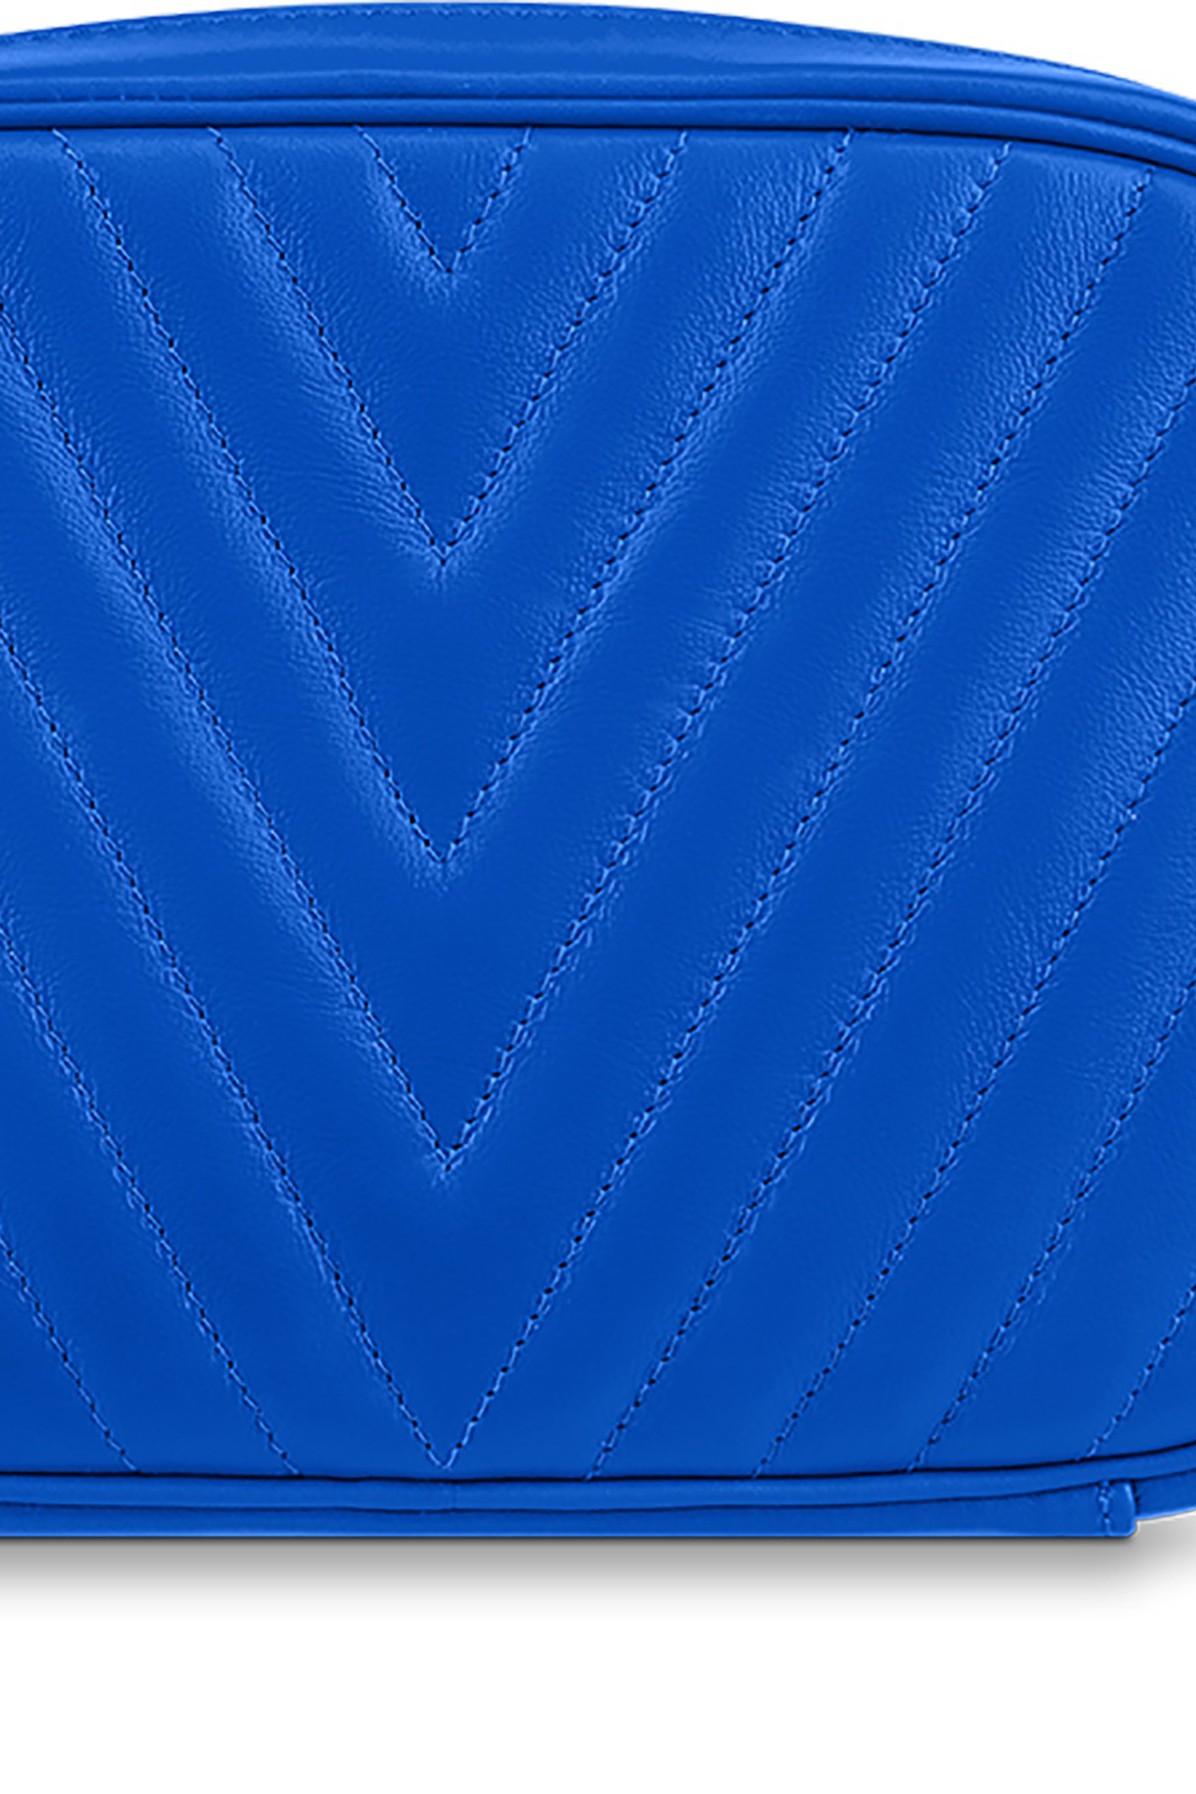 Louis Vuitton Epi New Wave Camera Bag Shoulder LV Light Blue M55329